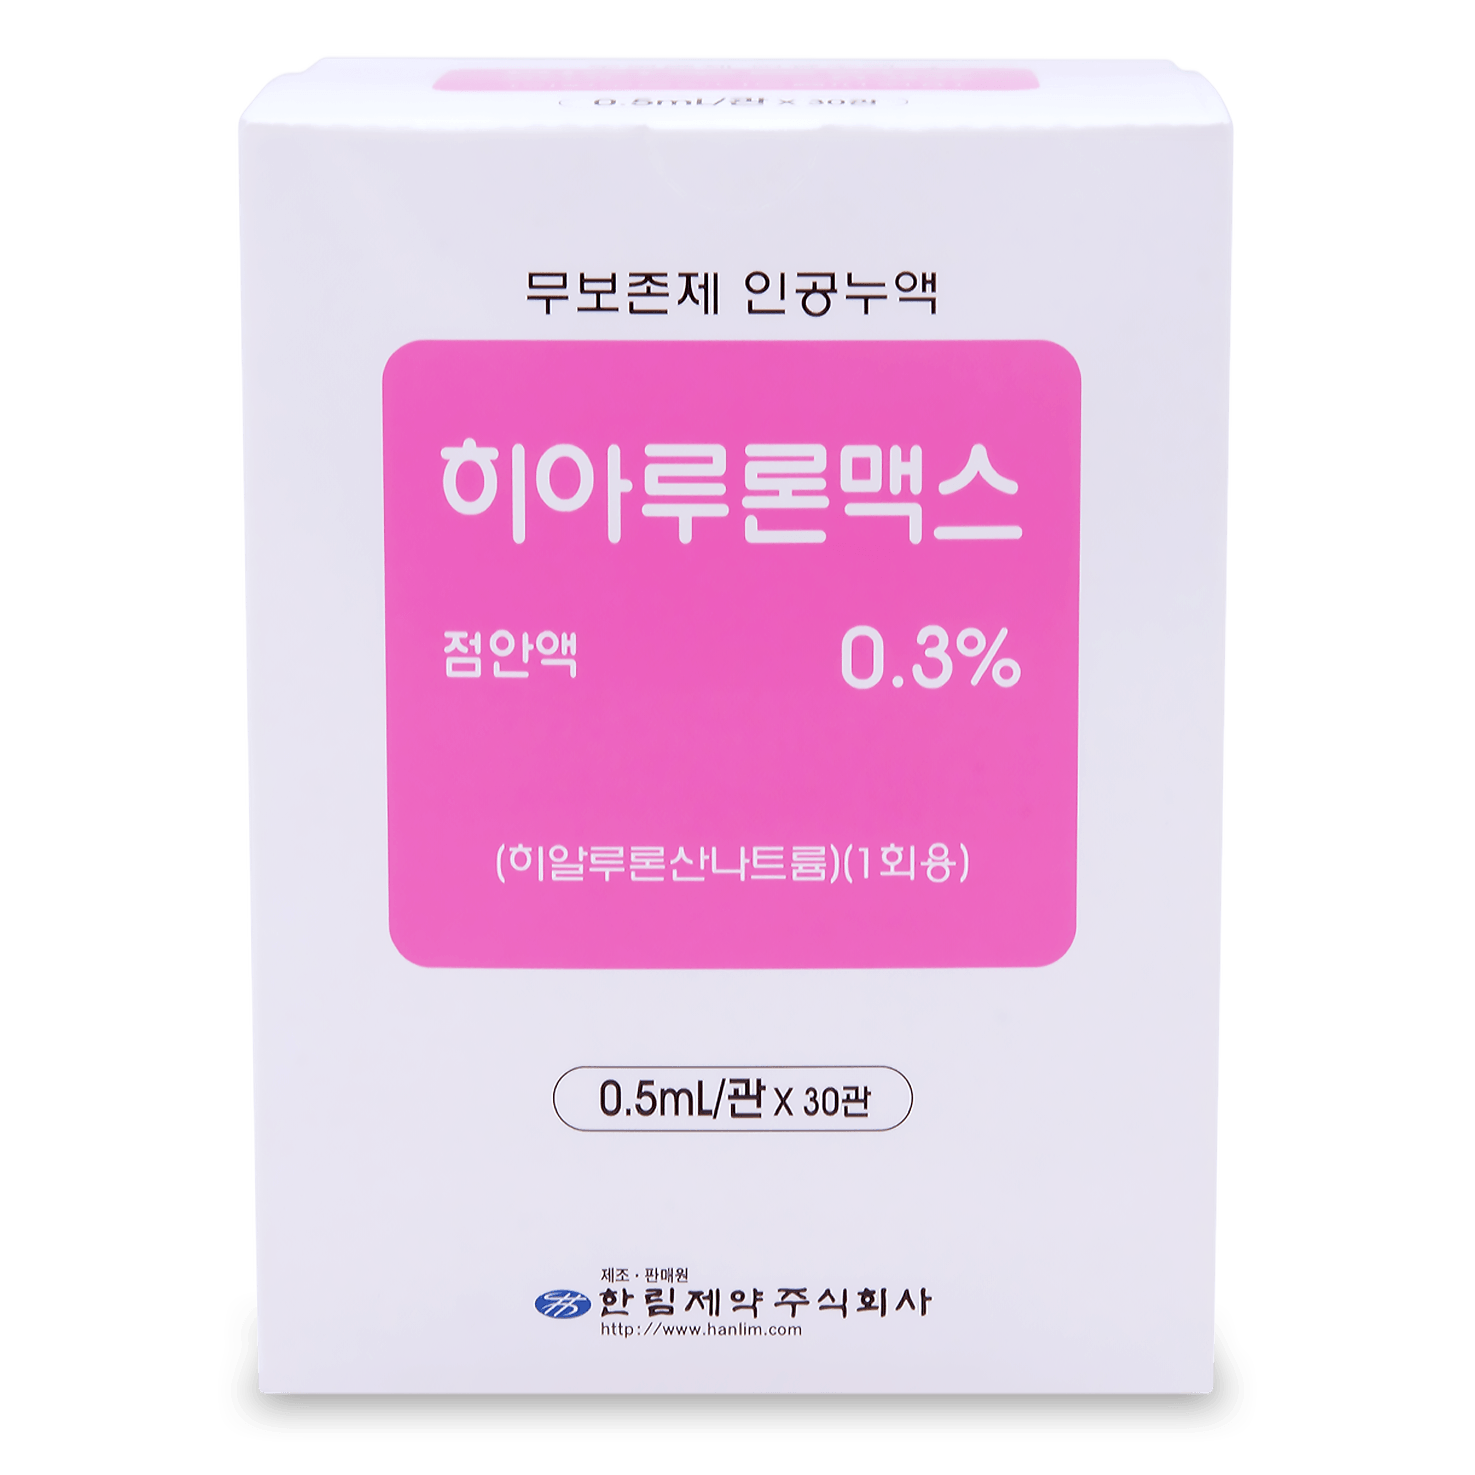 Hyaluron Max 0.3% Eye Drops 0.5ml x 60's  (5's x 12 packs) (Korean pack) -each ml contains:  Sodium Hyaluronate 3mg